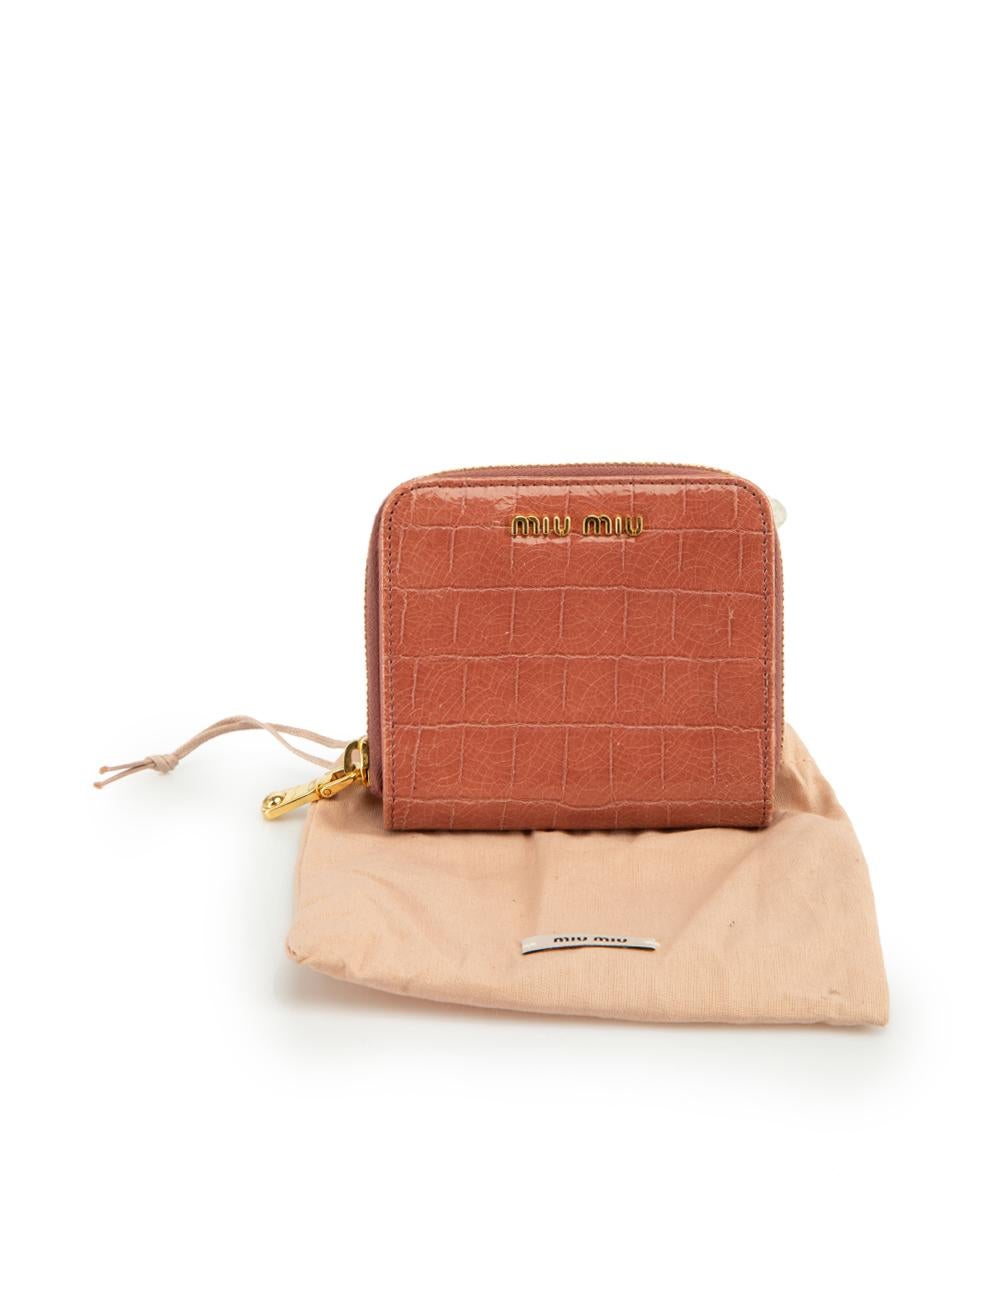 Miu Miu Women's Pink Patent Leather Crocodile Embossed Wallet 5